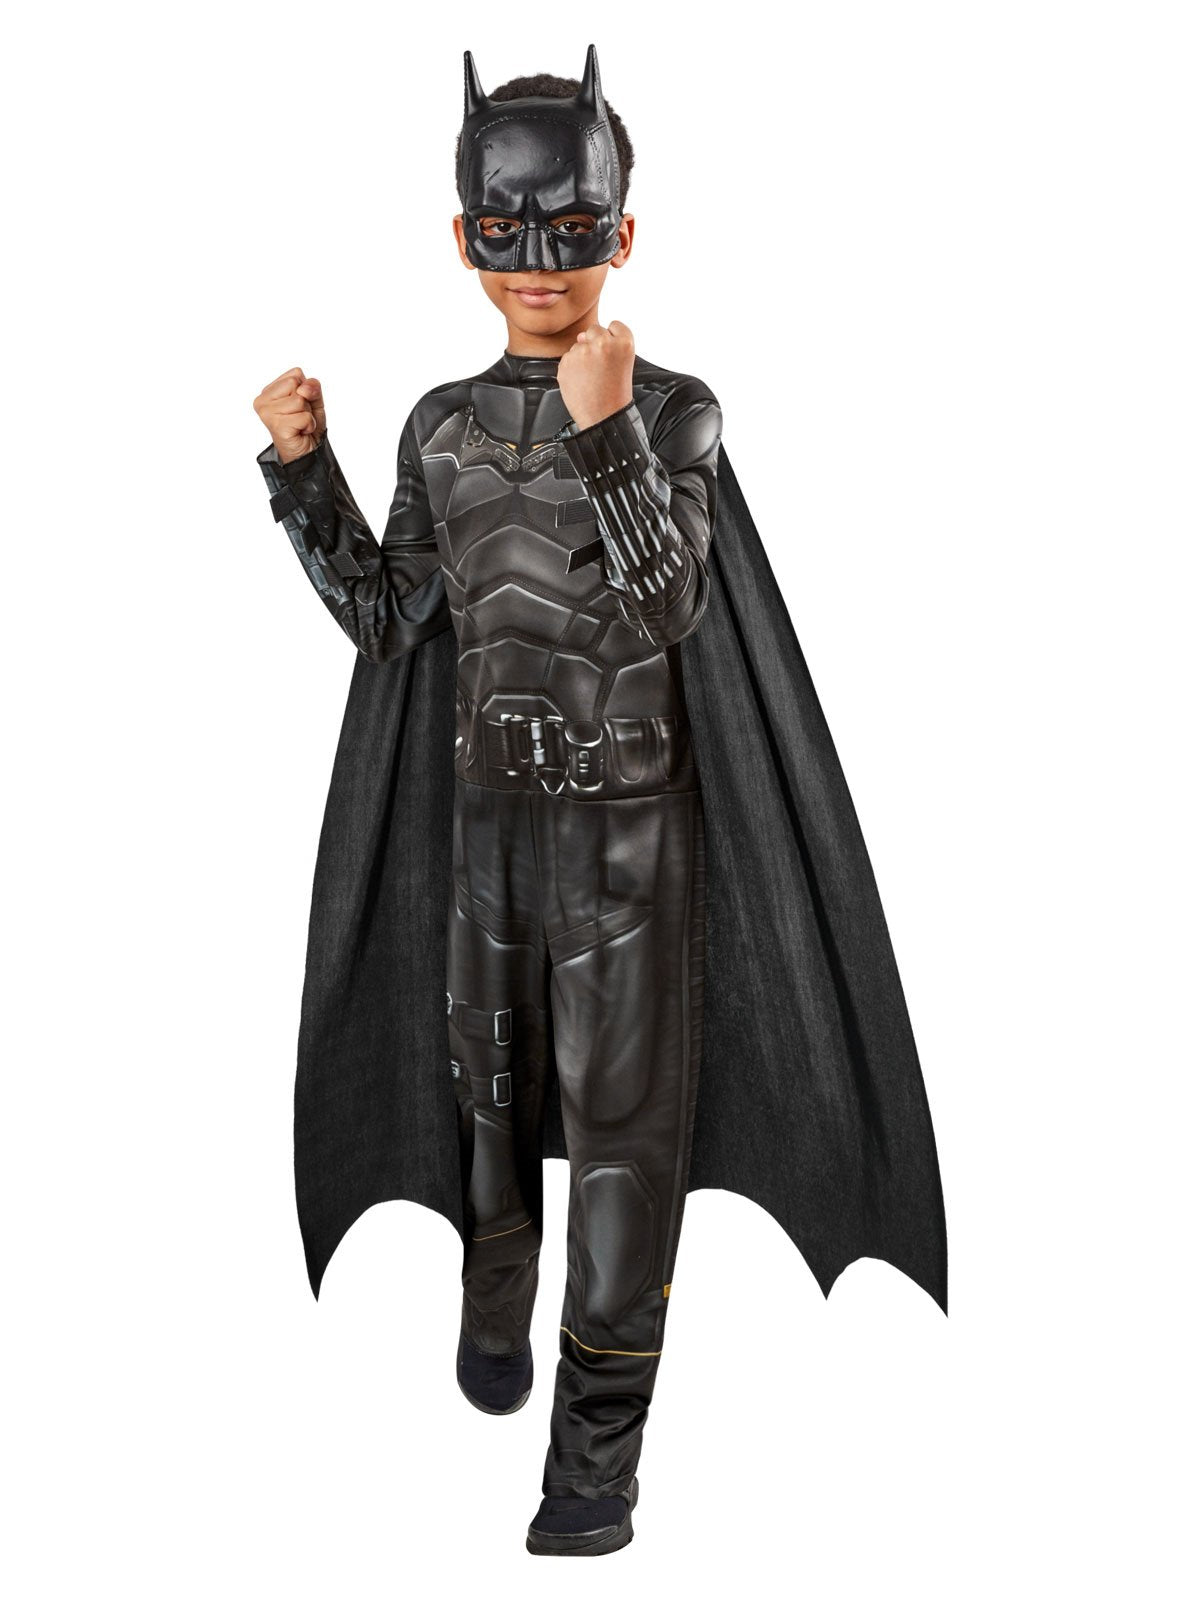 Costume Child Batman Deluxe Large 9-10